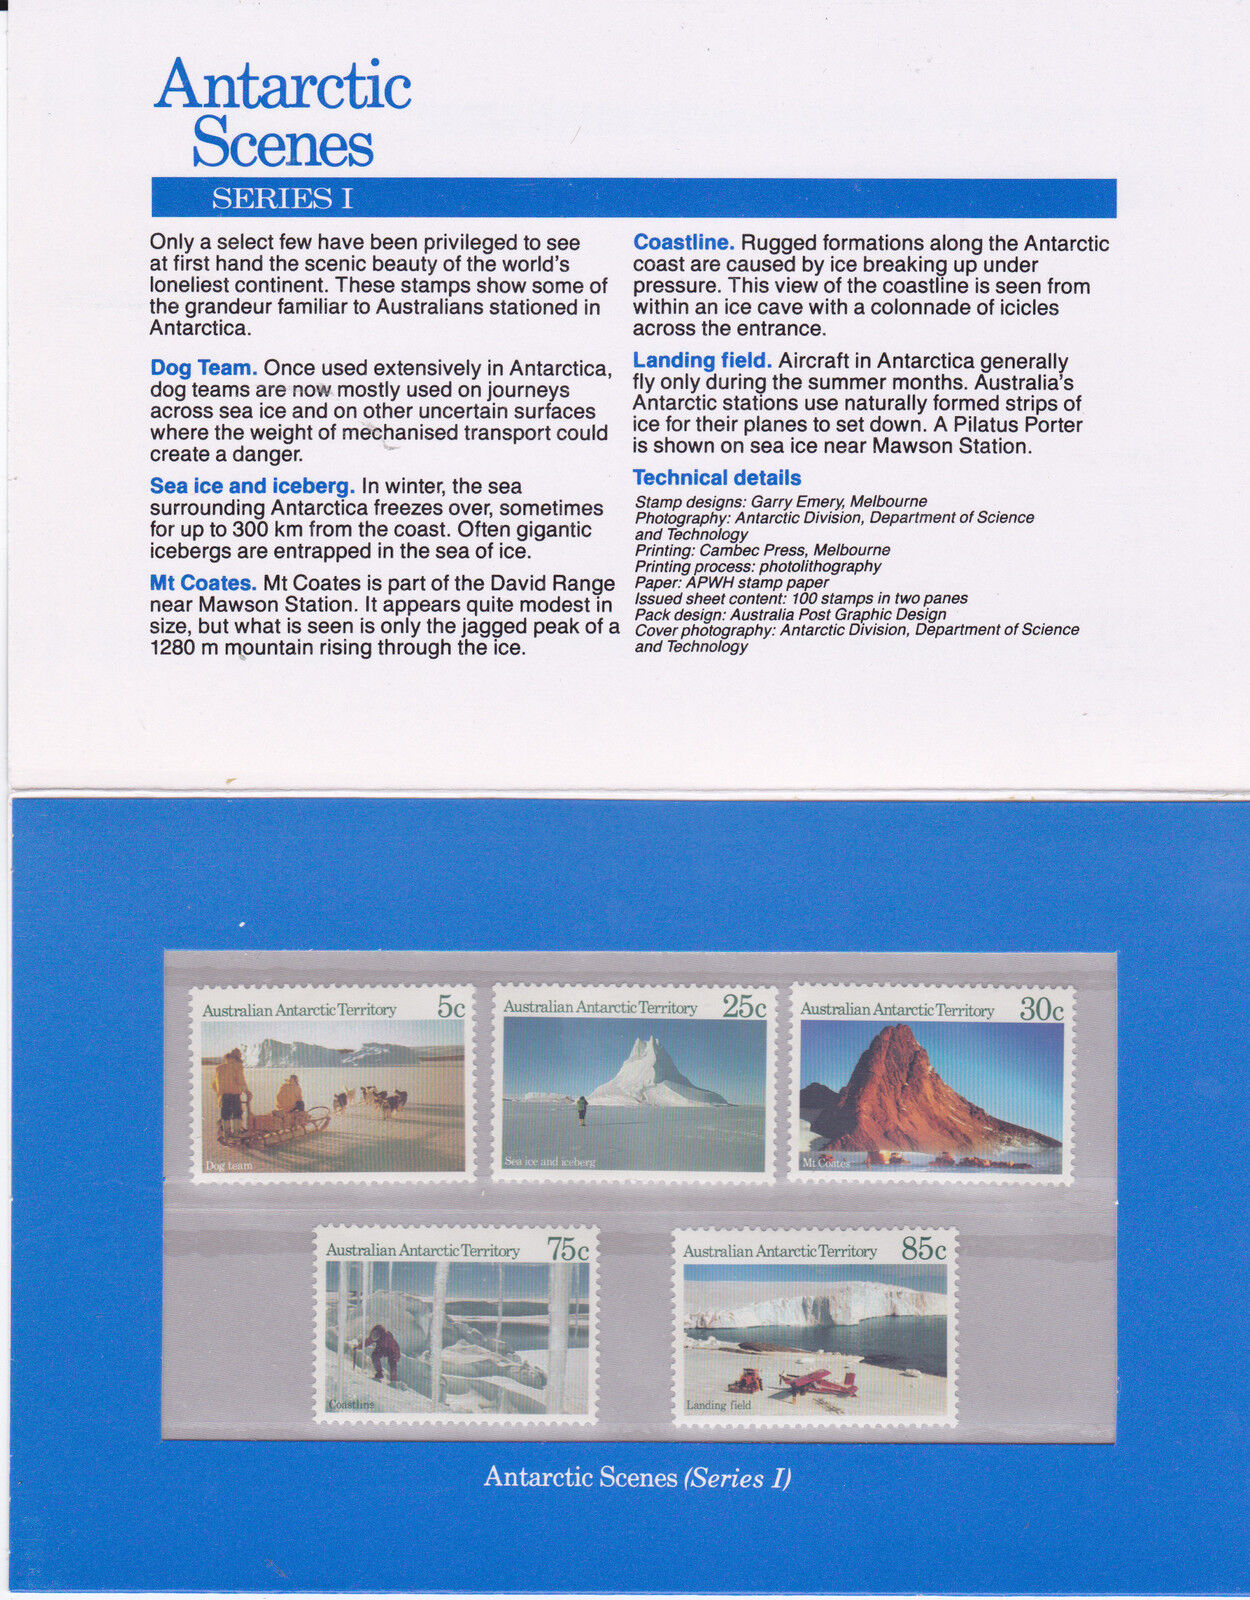 1984 AAT Antarctic Scenes I - Post Office Pack